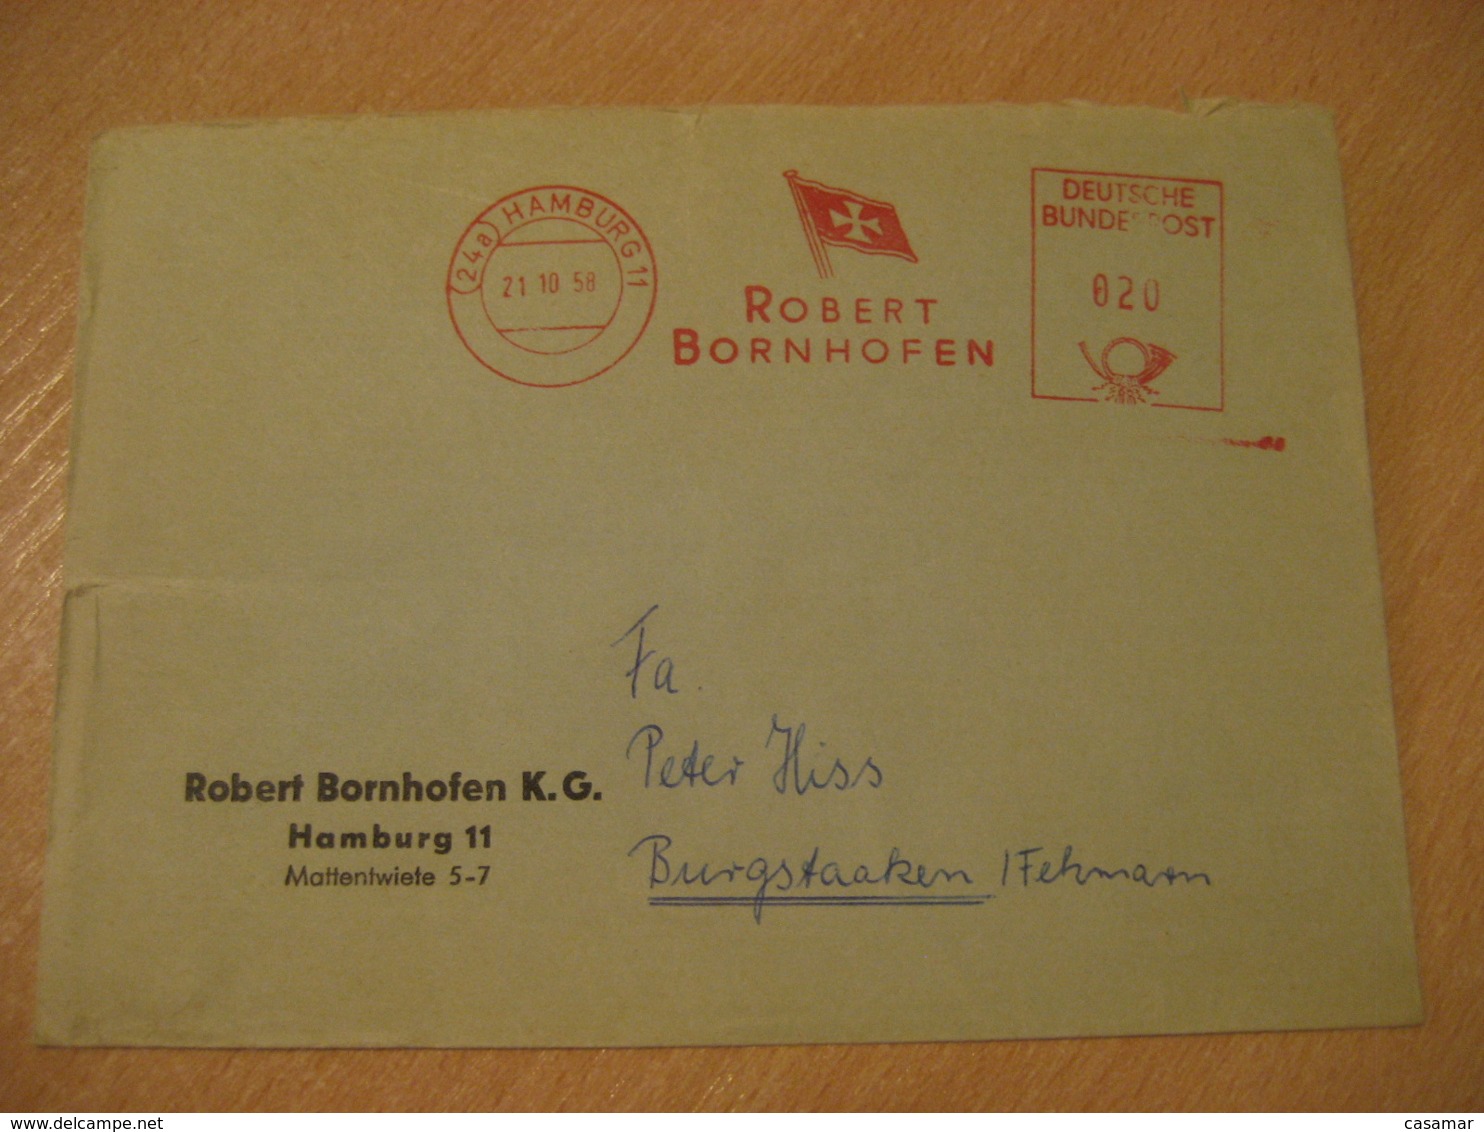 HAMBURG 1958 Robert Bornhofen Flag Flags Meter Mail Cancel Cover GERMANY - Enveloppes